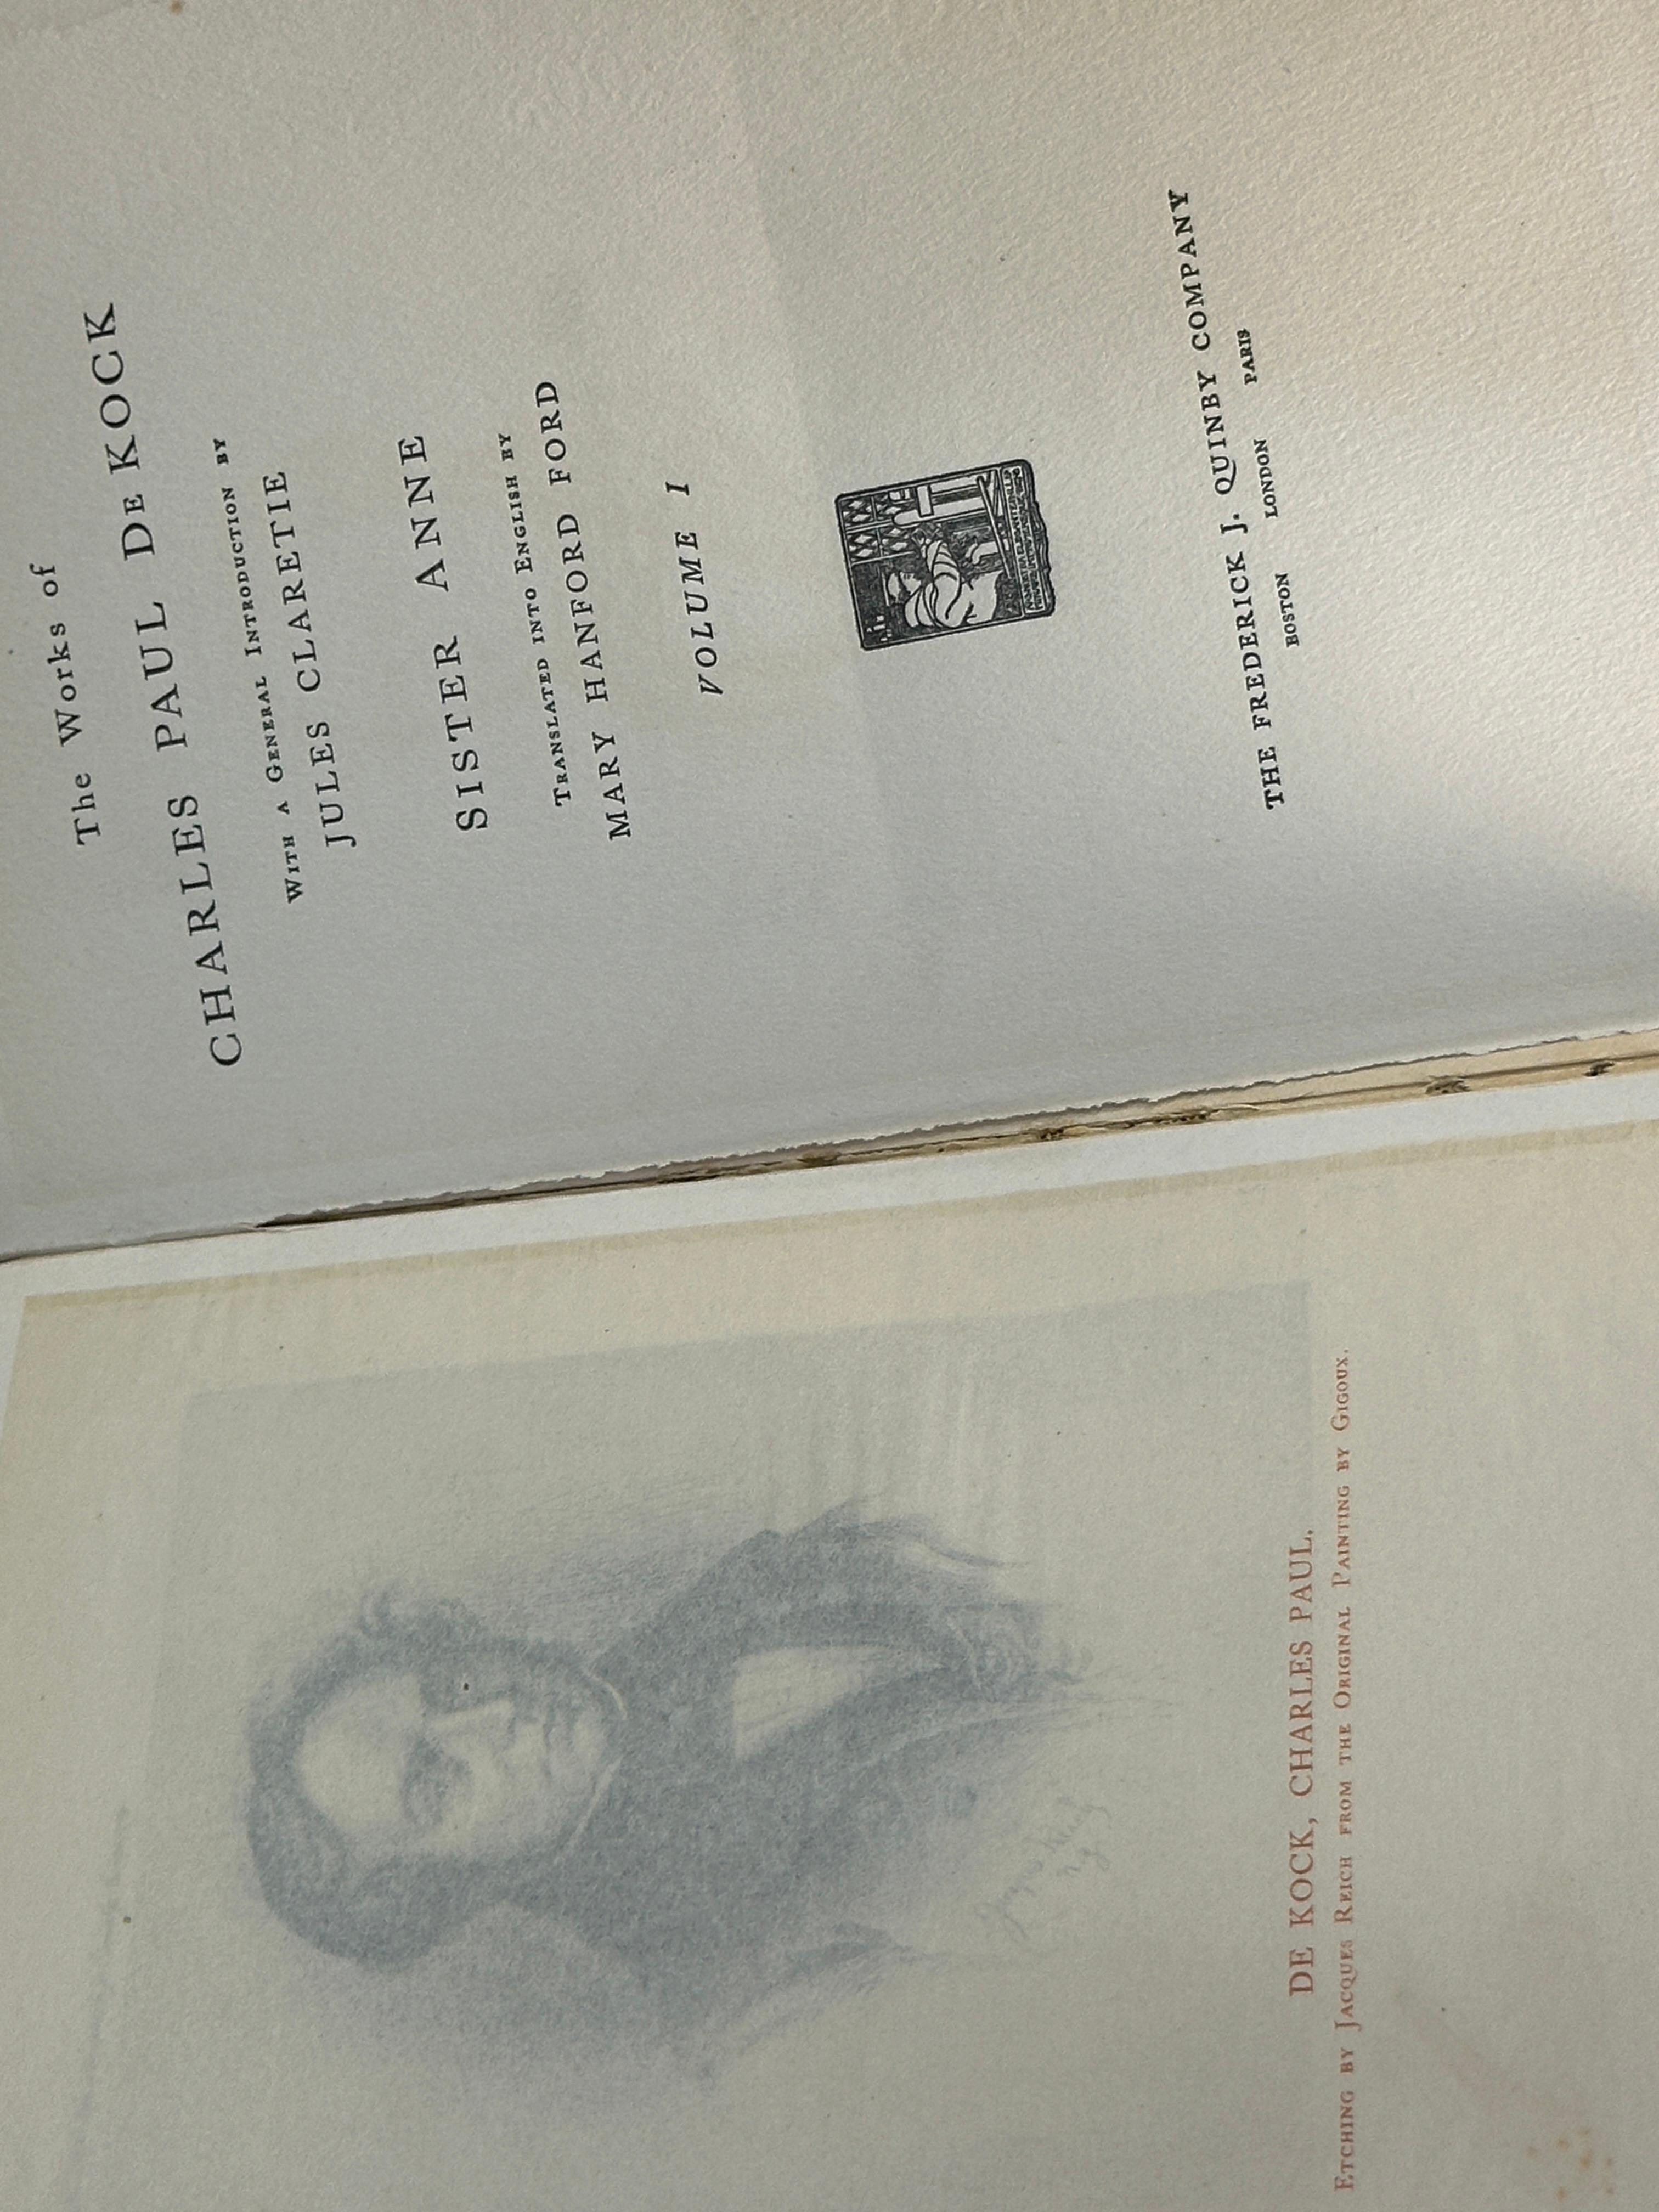 "Carles Paul de Kock Sister Anne" Vol. 1 and 2 Artists' Edition